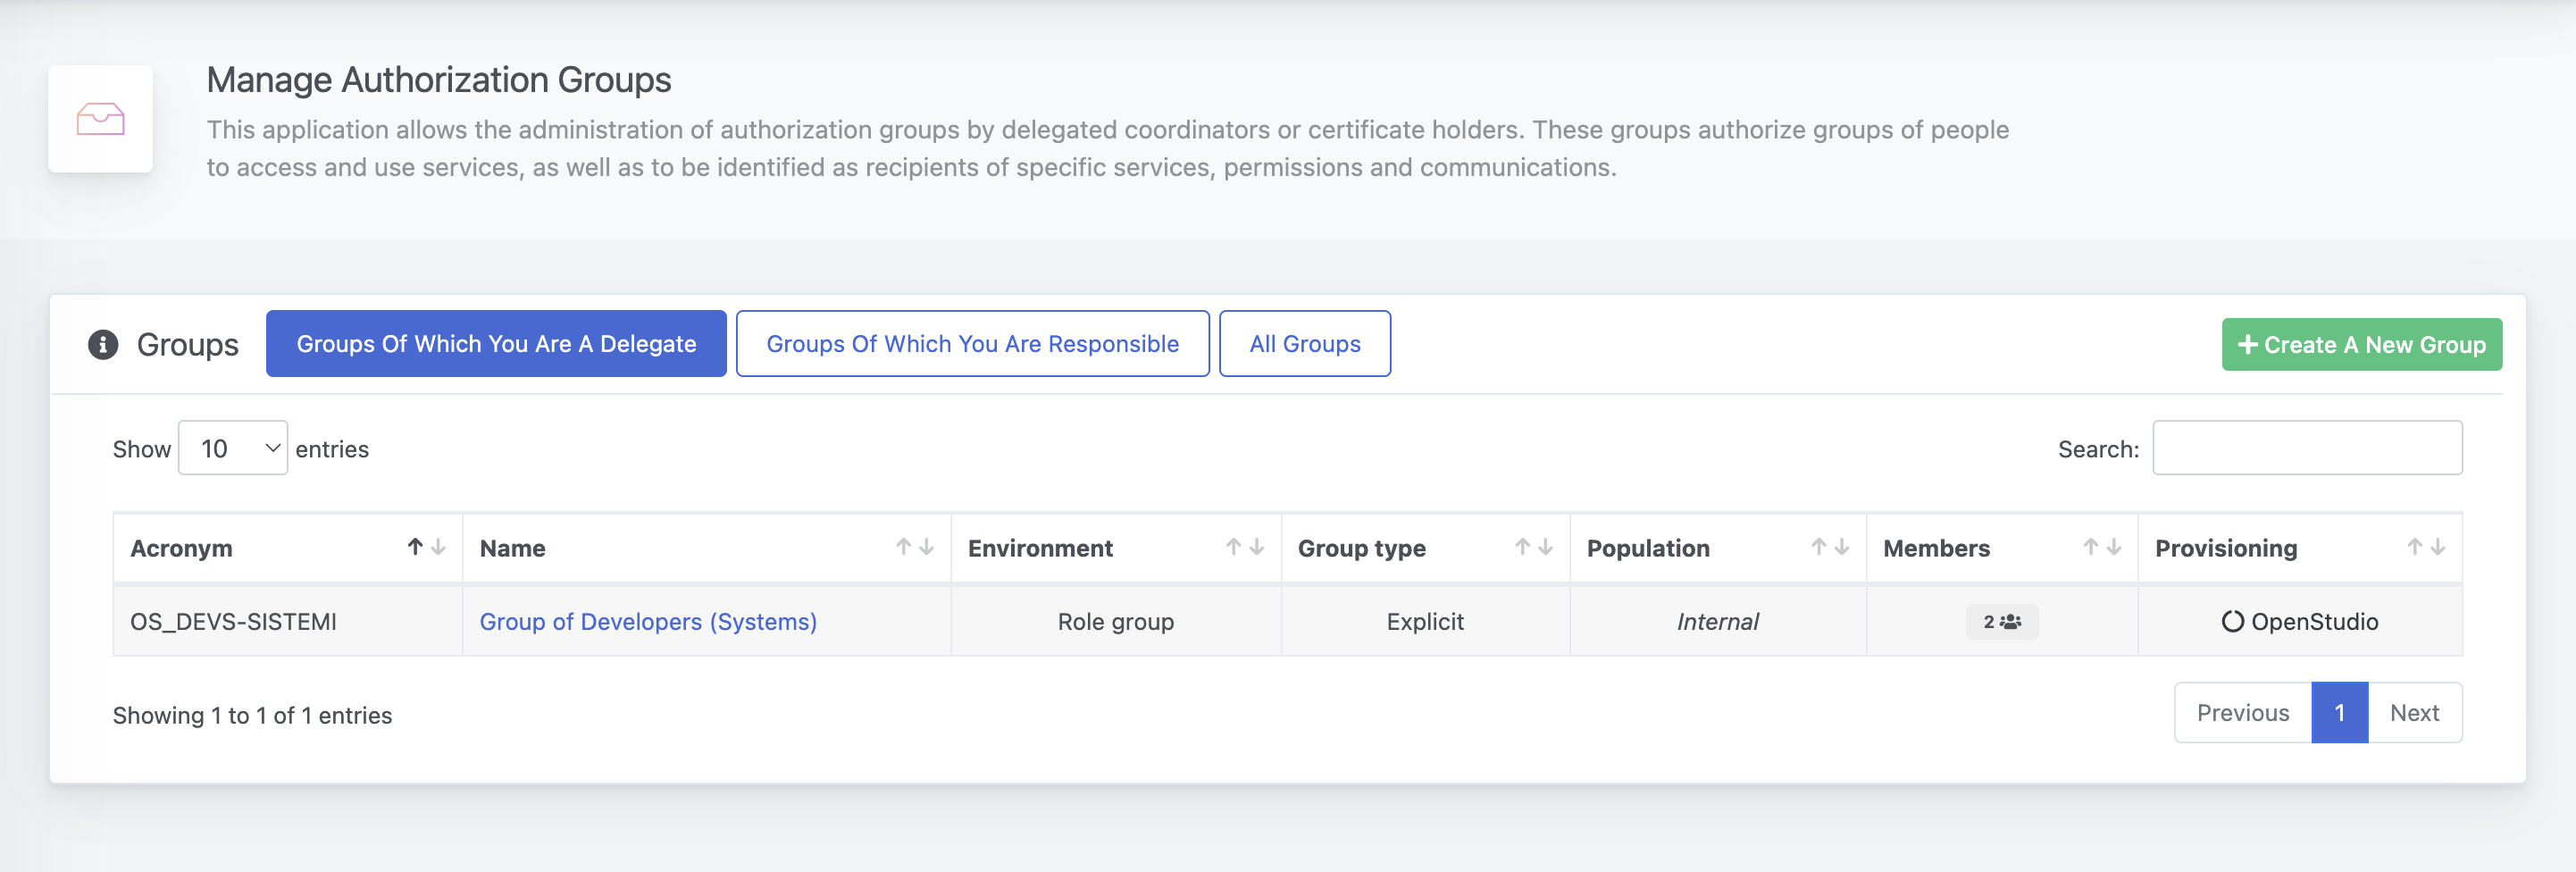 OpenStudio - Manage Authorization Groups - Groups List